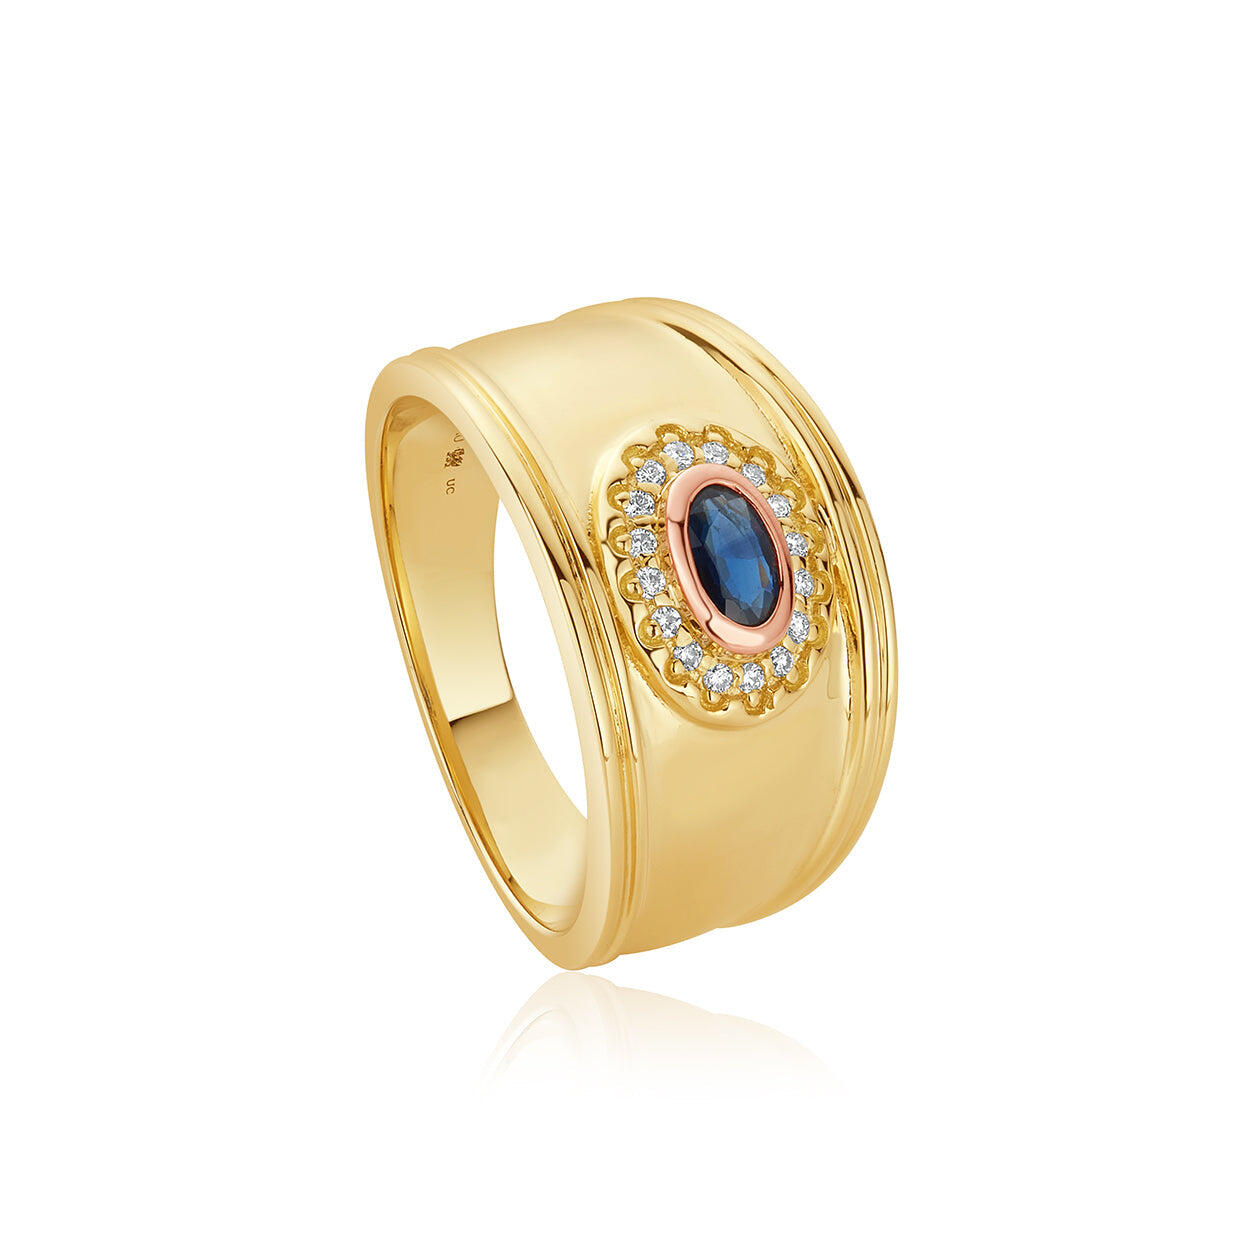 Clogau Princess Diana Sapphire Diamond 9ct Gold Ring - S